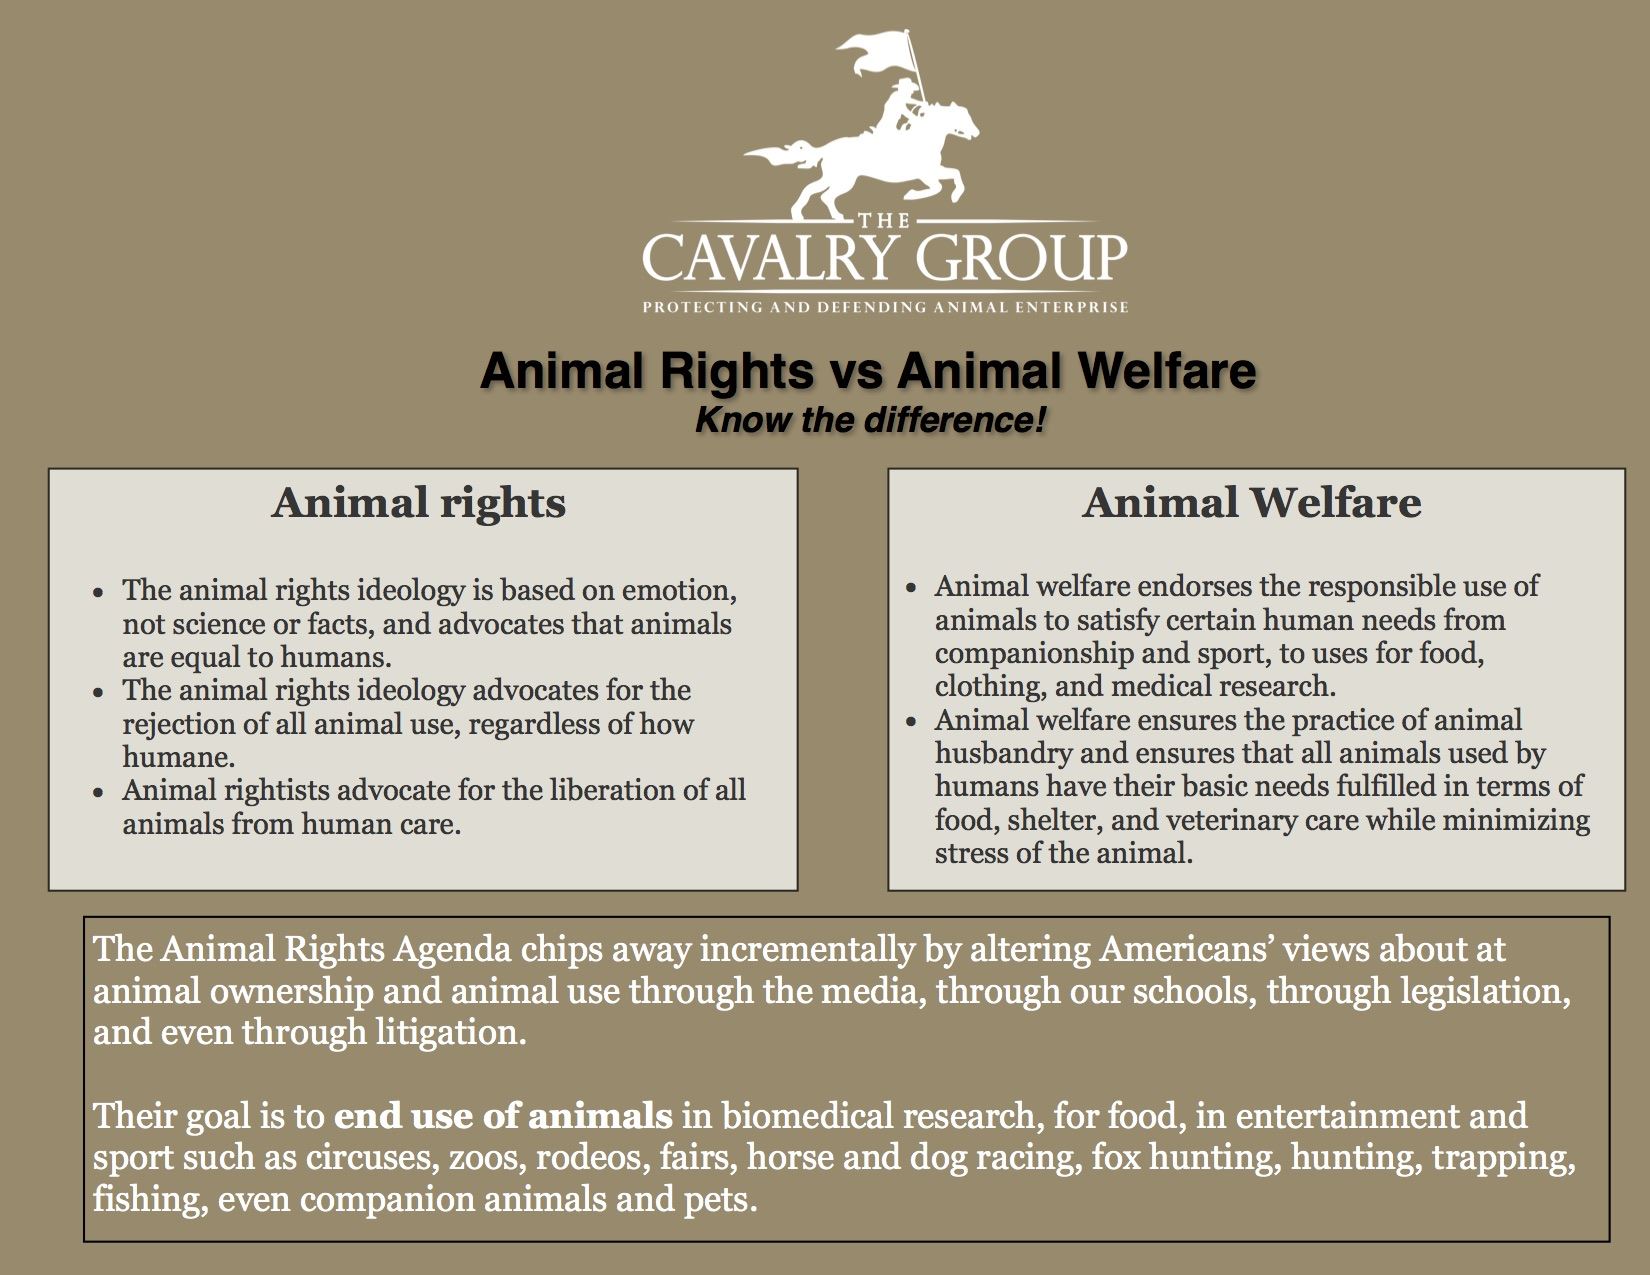 The Cavalry Group - Animal Rights vs Animal Welfare